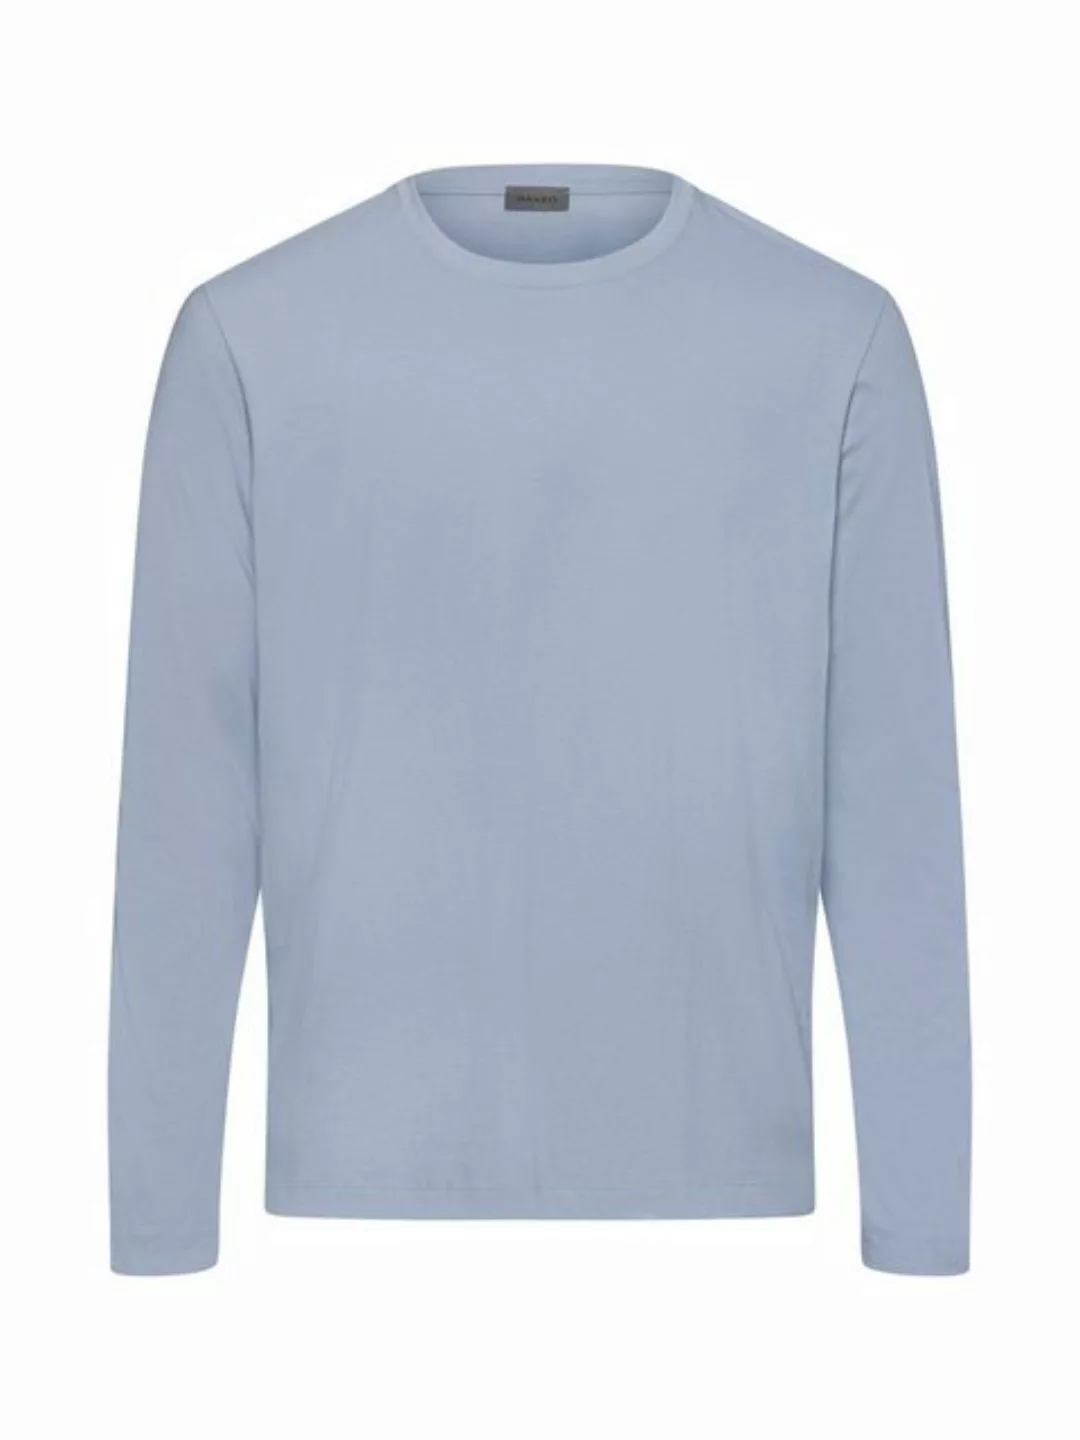 Hanro Longsleeve Living Shirts unterhemd shirt langarm günstig online kaufen